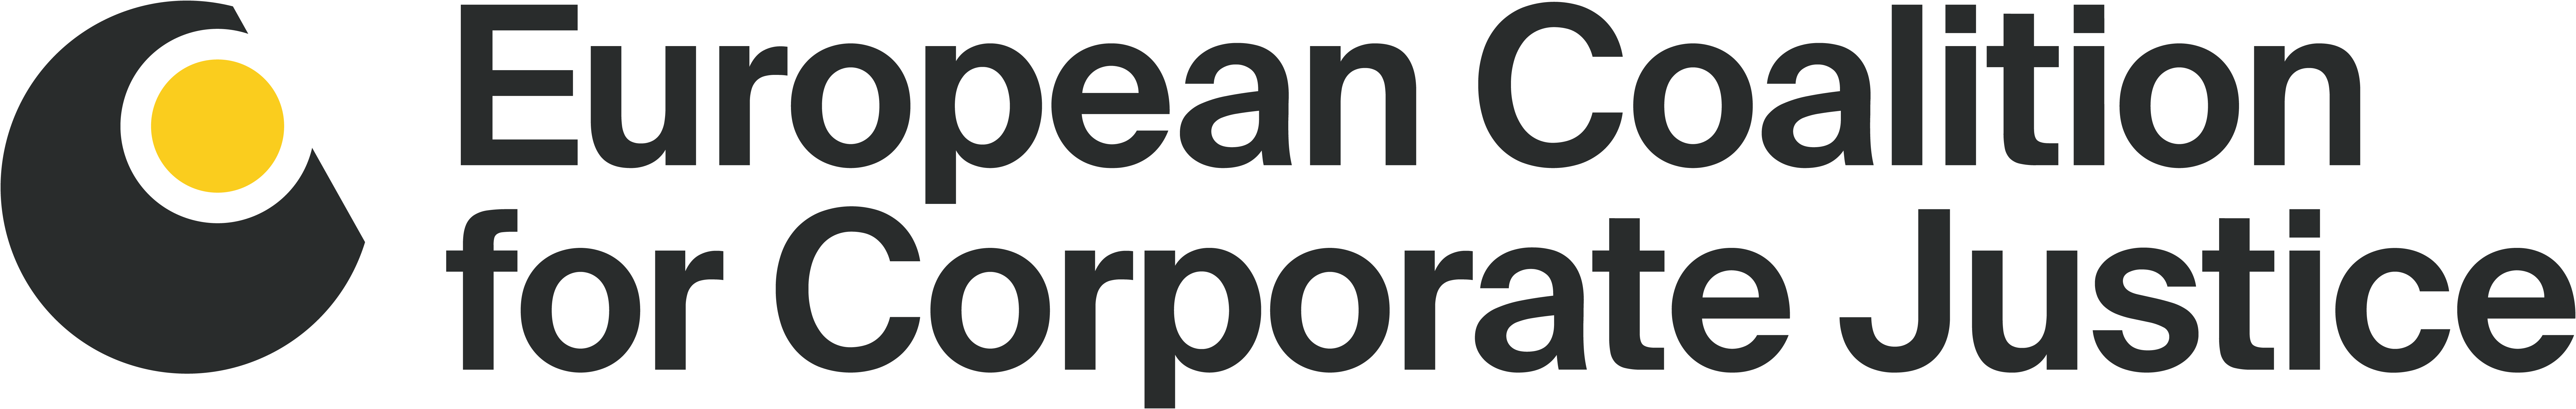 European Coalition for Corporate Justice / ECCJ